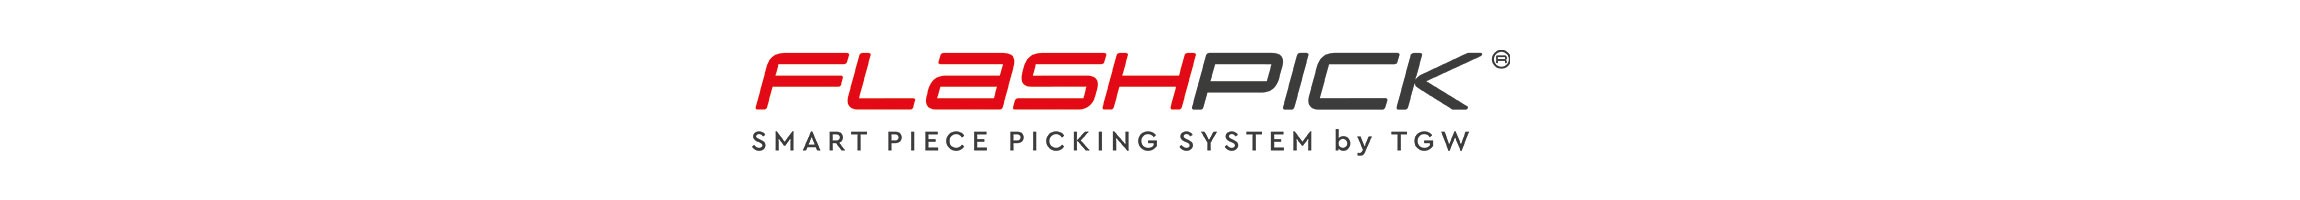 FlashPick® - Smart Piece Picking System by TGW